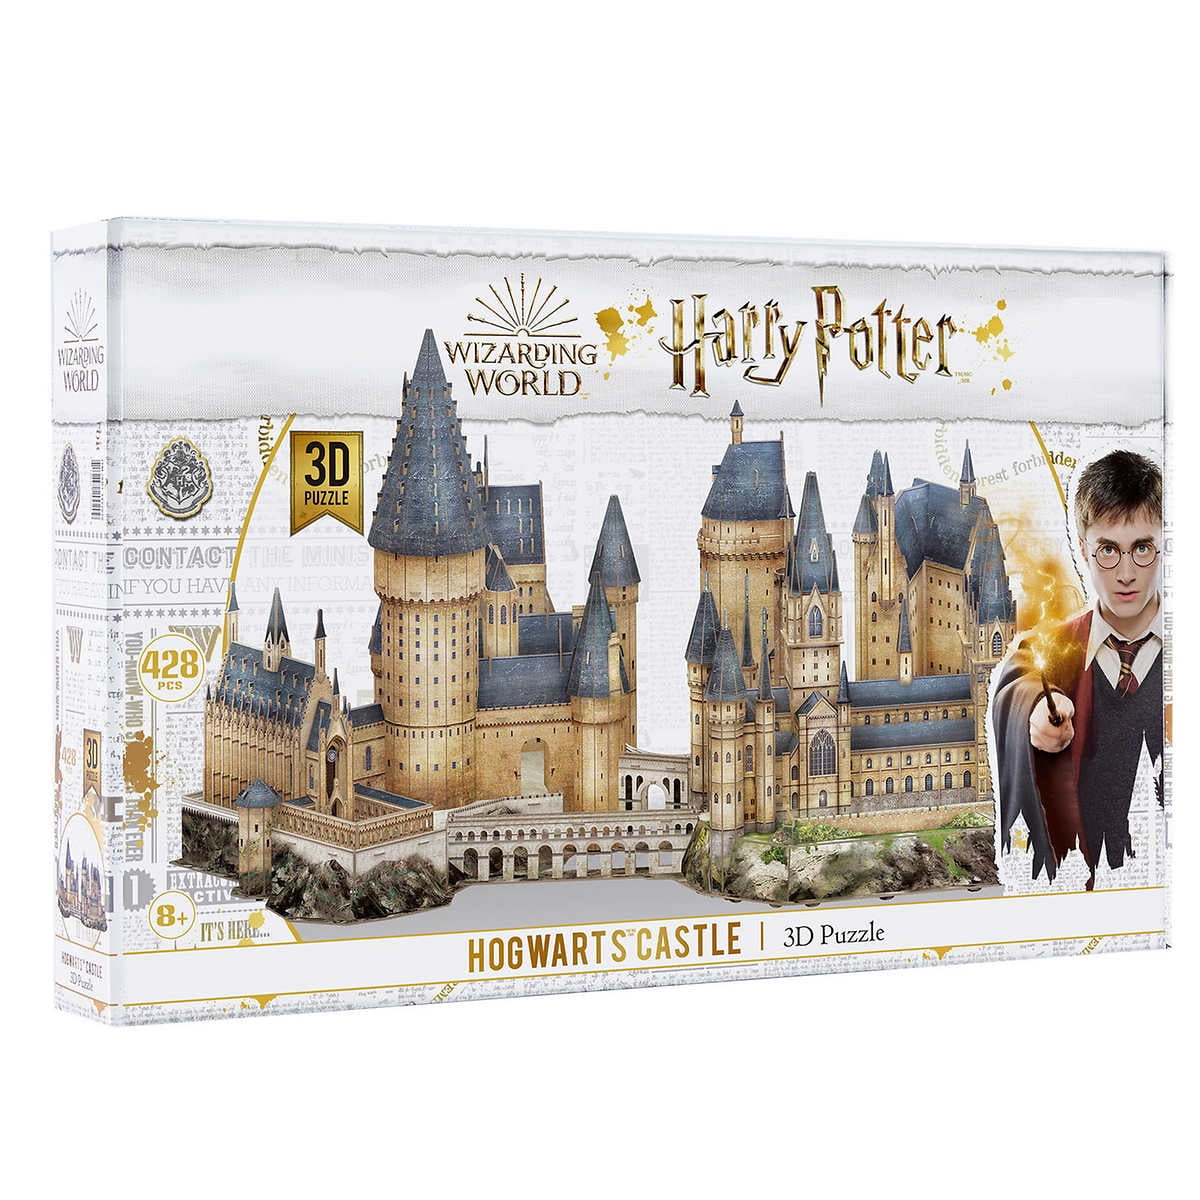 New Harry Potter Wizarding World Hogwarts Castle 3D Puzzle 428 Pieces Large NEW 